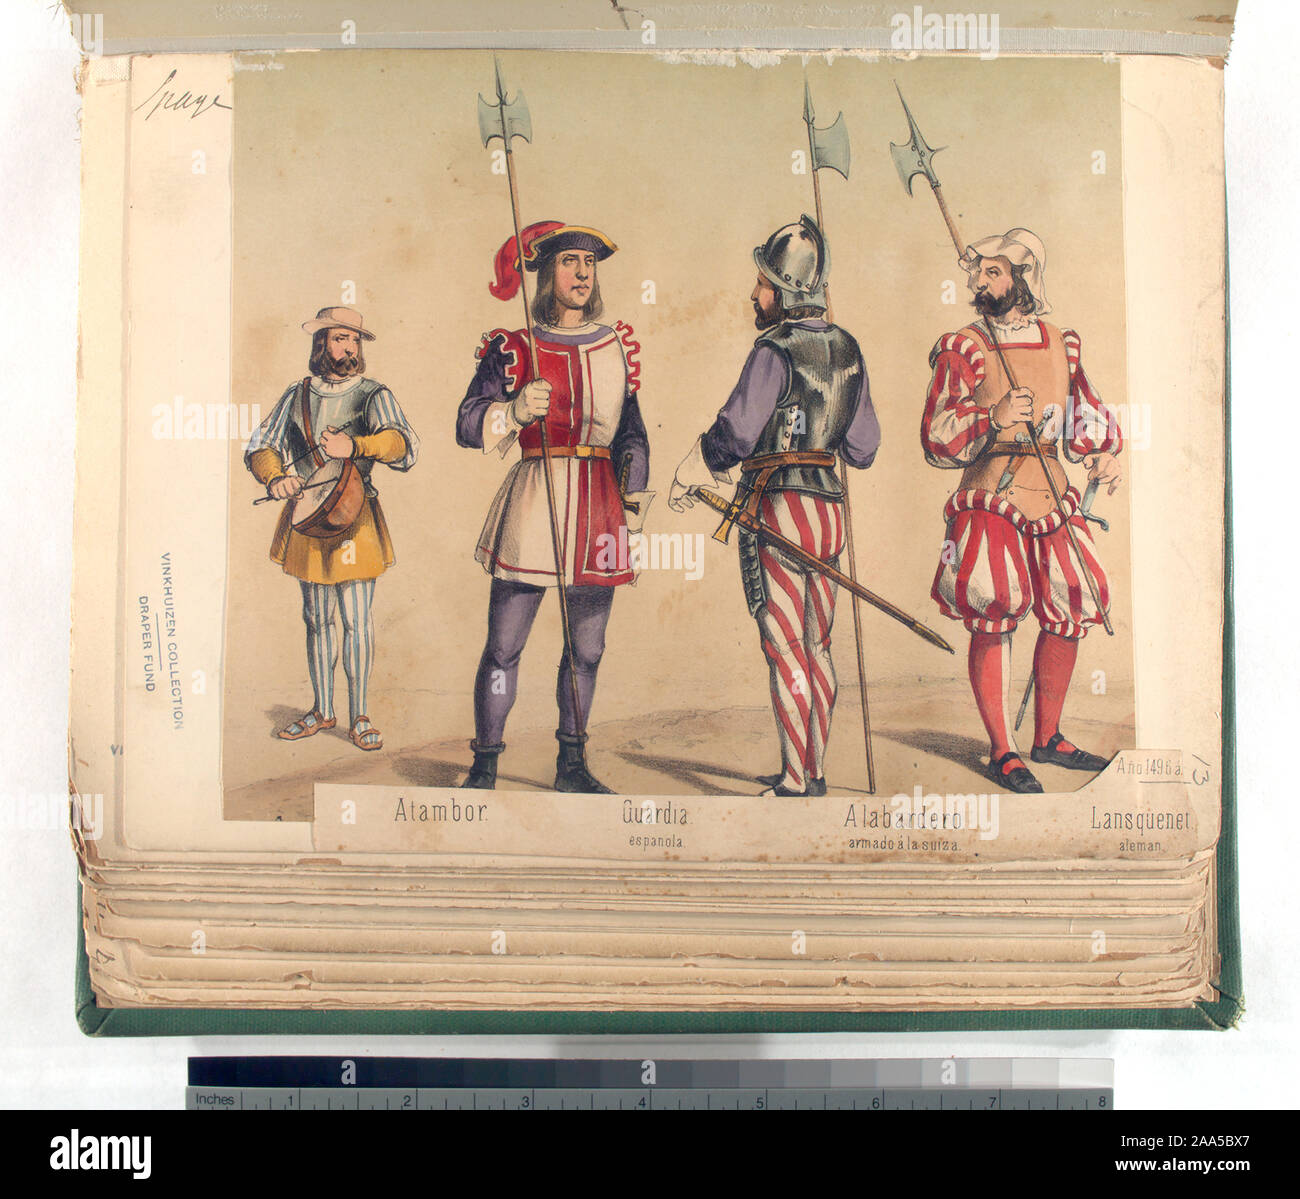 The Draper Fund; Atambor; Guardia, espanola; Alabardero, armado á la suiza; Lansquenet, aleman. 1496 Stock Photo